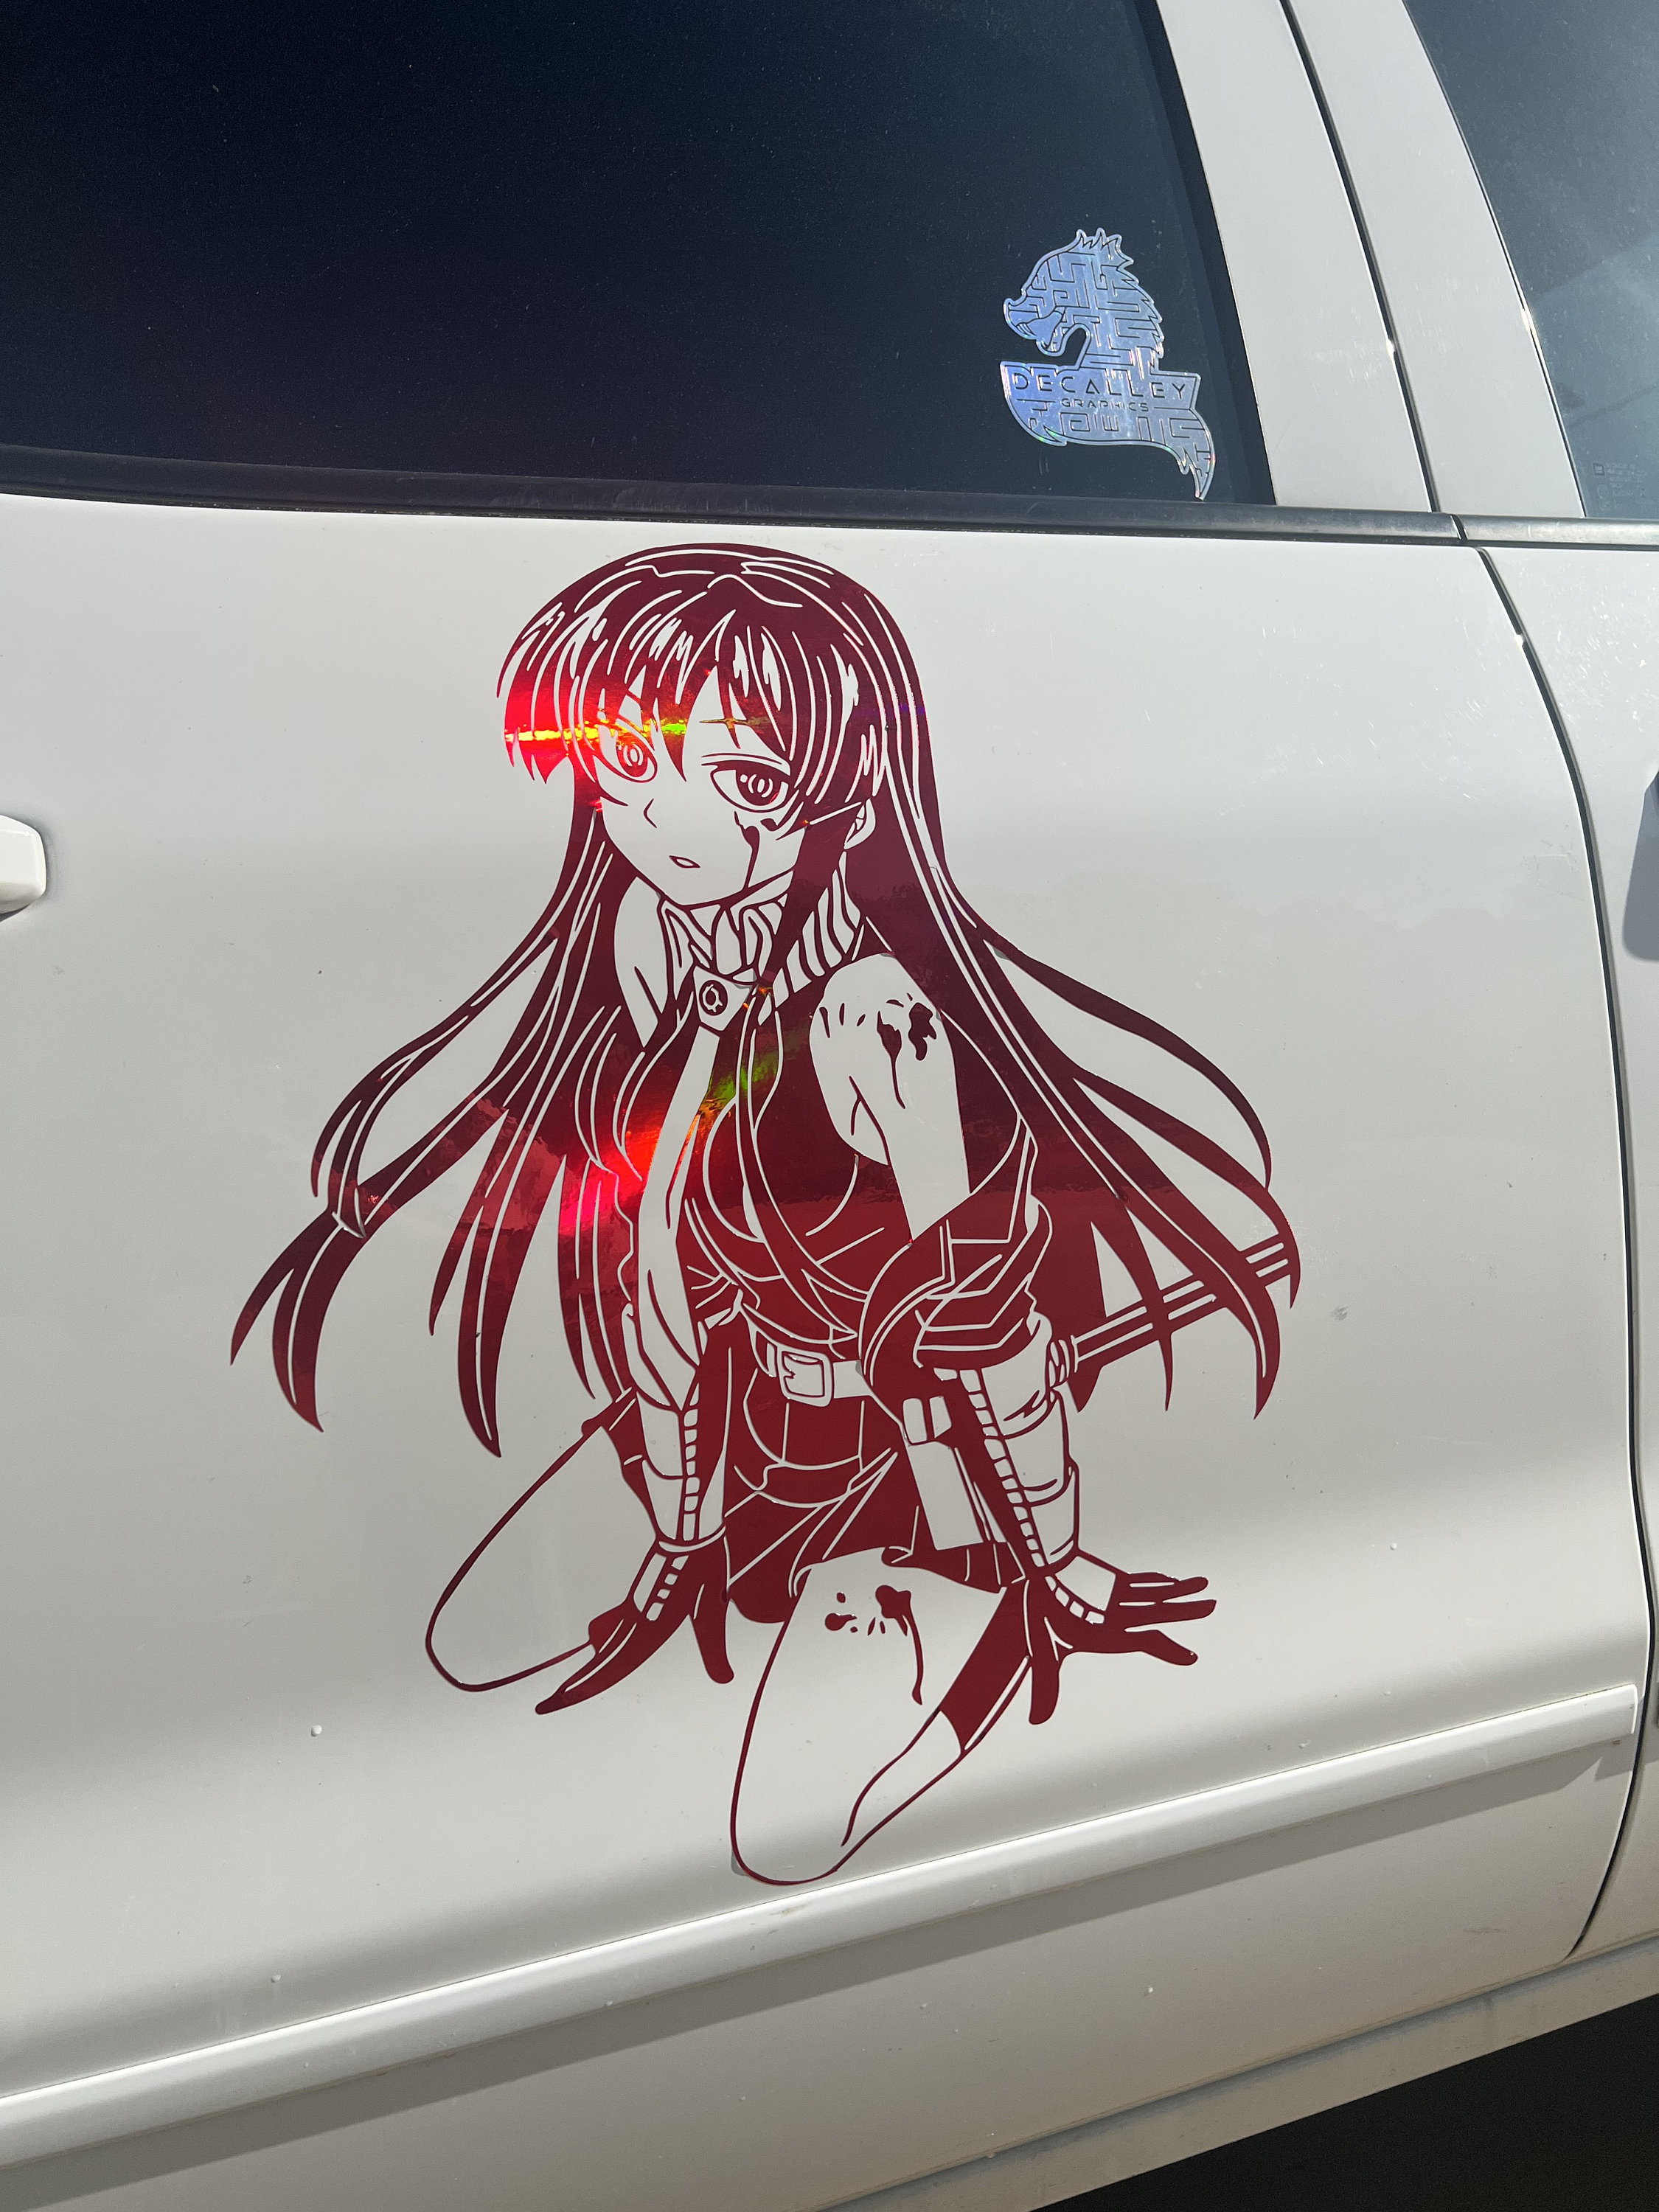 Anime Car Decal  Geeksticker